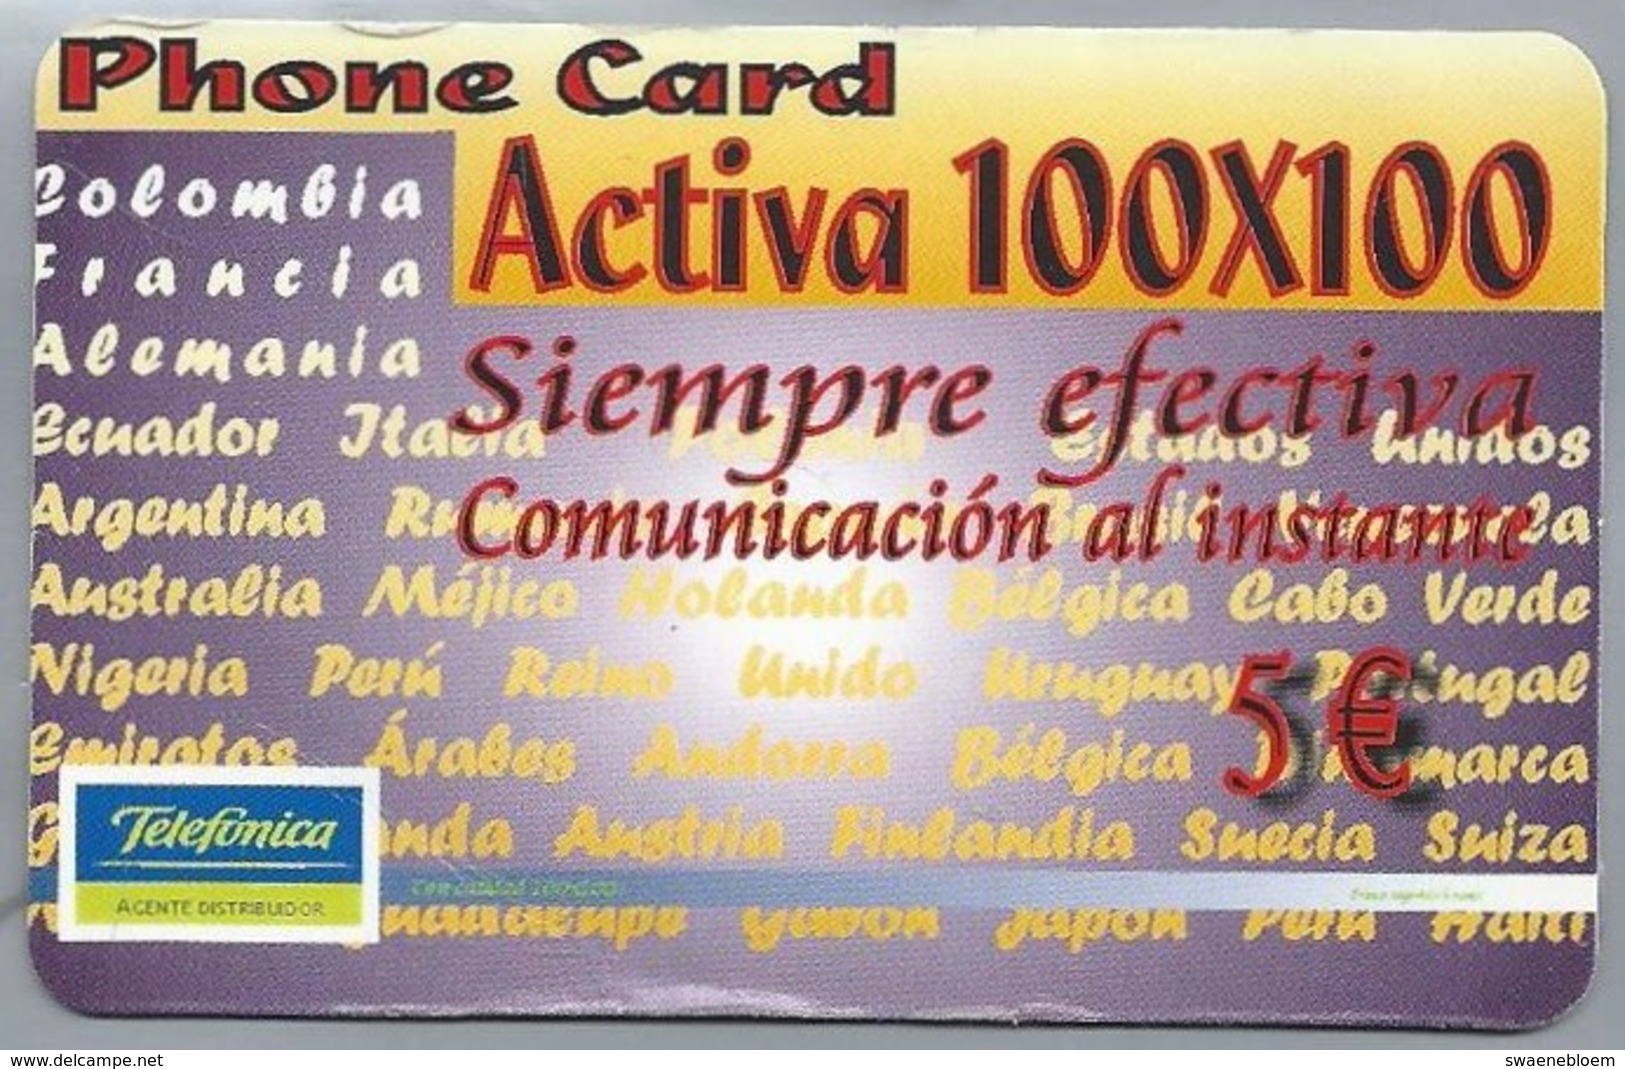 ES.- Telefonica De Espana. Phone Card. Activa 100x100. Siempre Efectiva. Cominication Al Instante. 5 €. - Telefonica